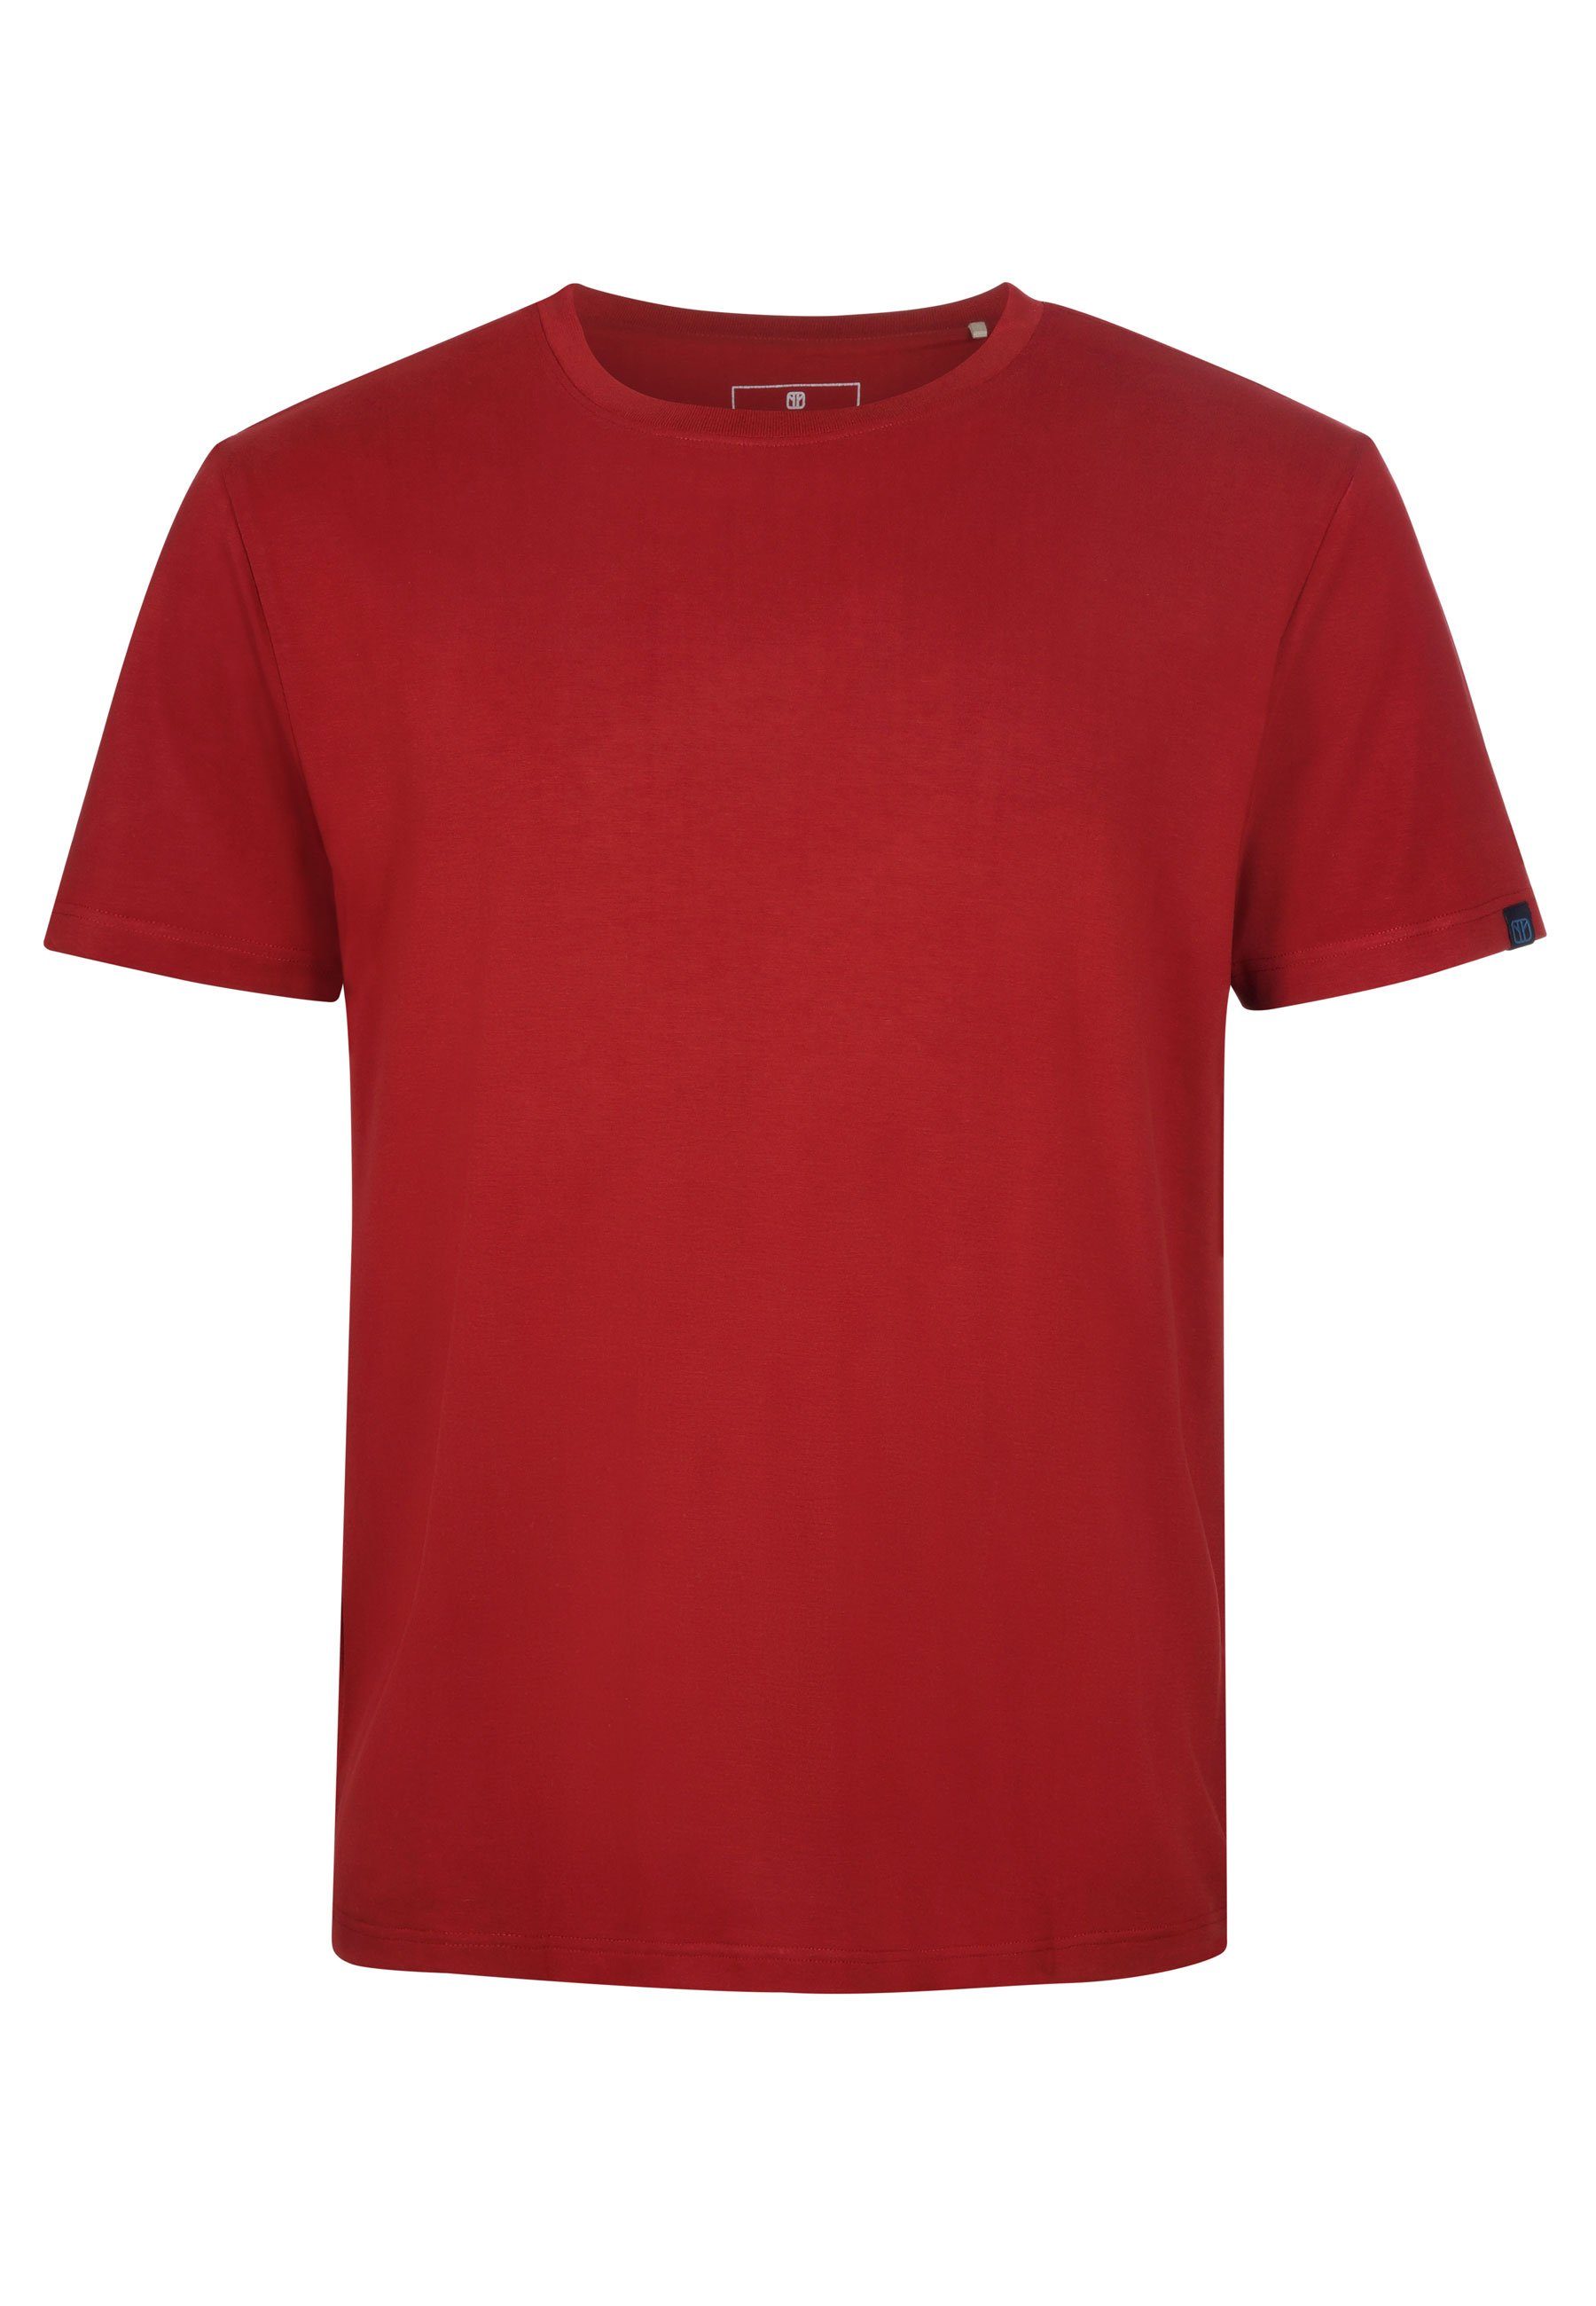 Elkline T-Shirt Bamboo Basic Kurzarm Jersey Shirt aus weichem Bambus Viskose syrahred